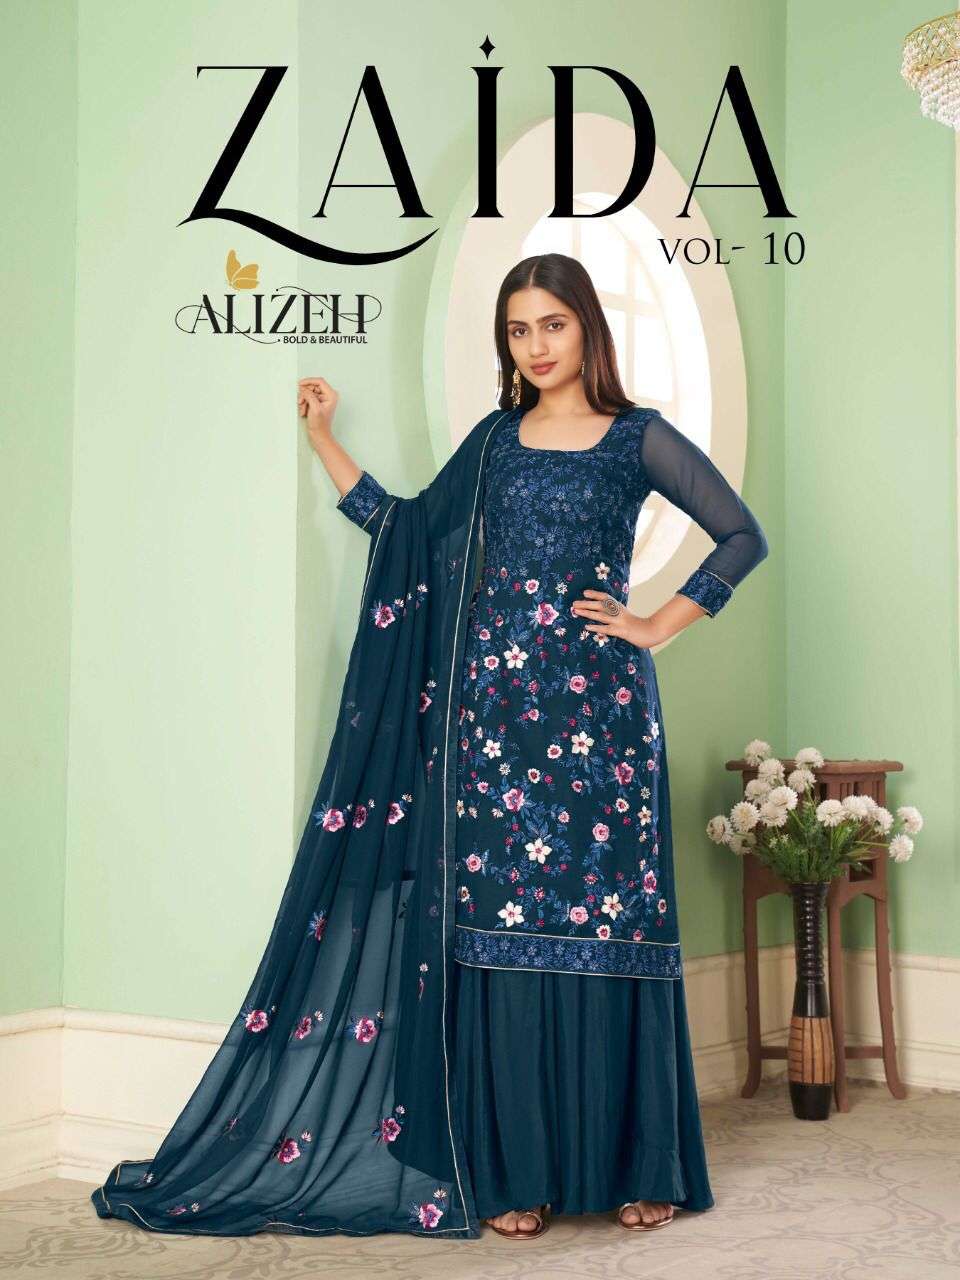 Alizeh Zaida Vol 10 Party Wear Sharara Salwar Kameez New Collection